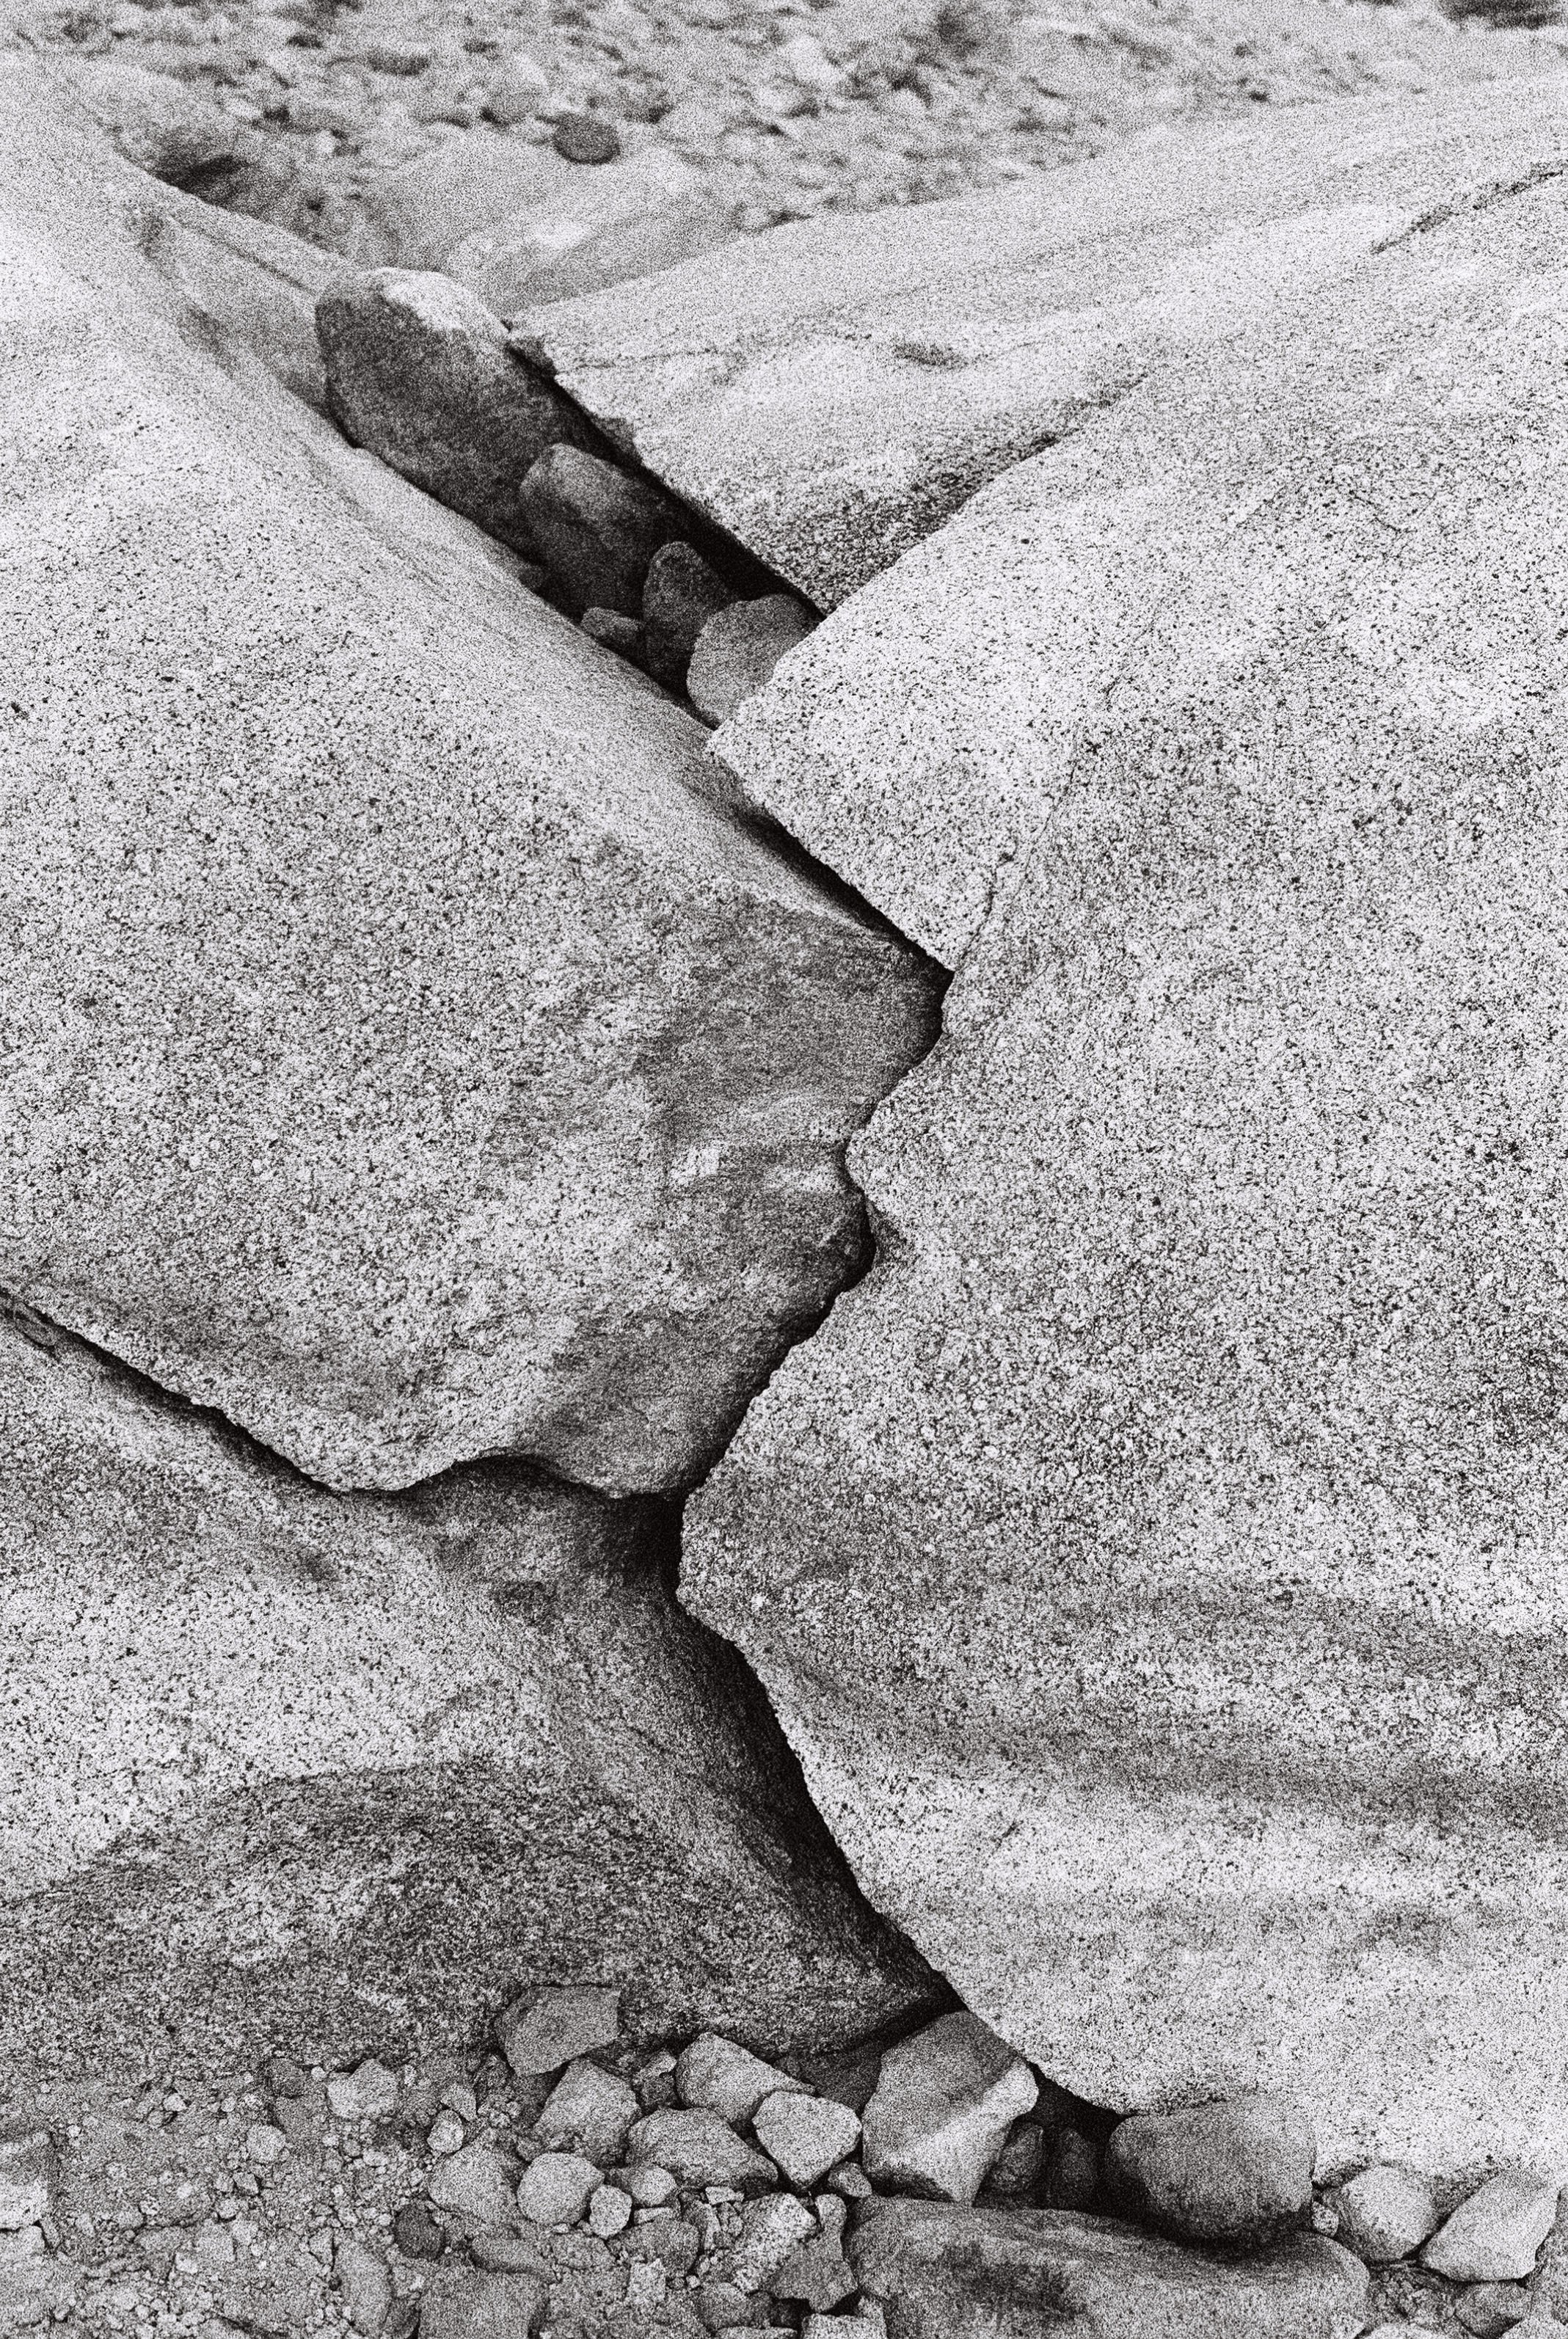  Boulders, Mammoth Lakes 2021 